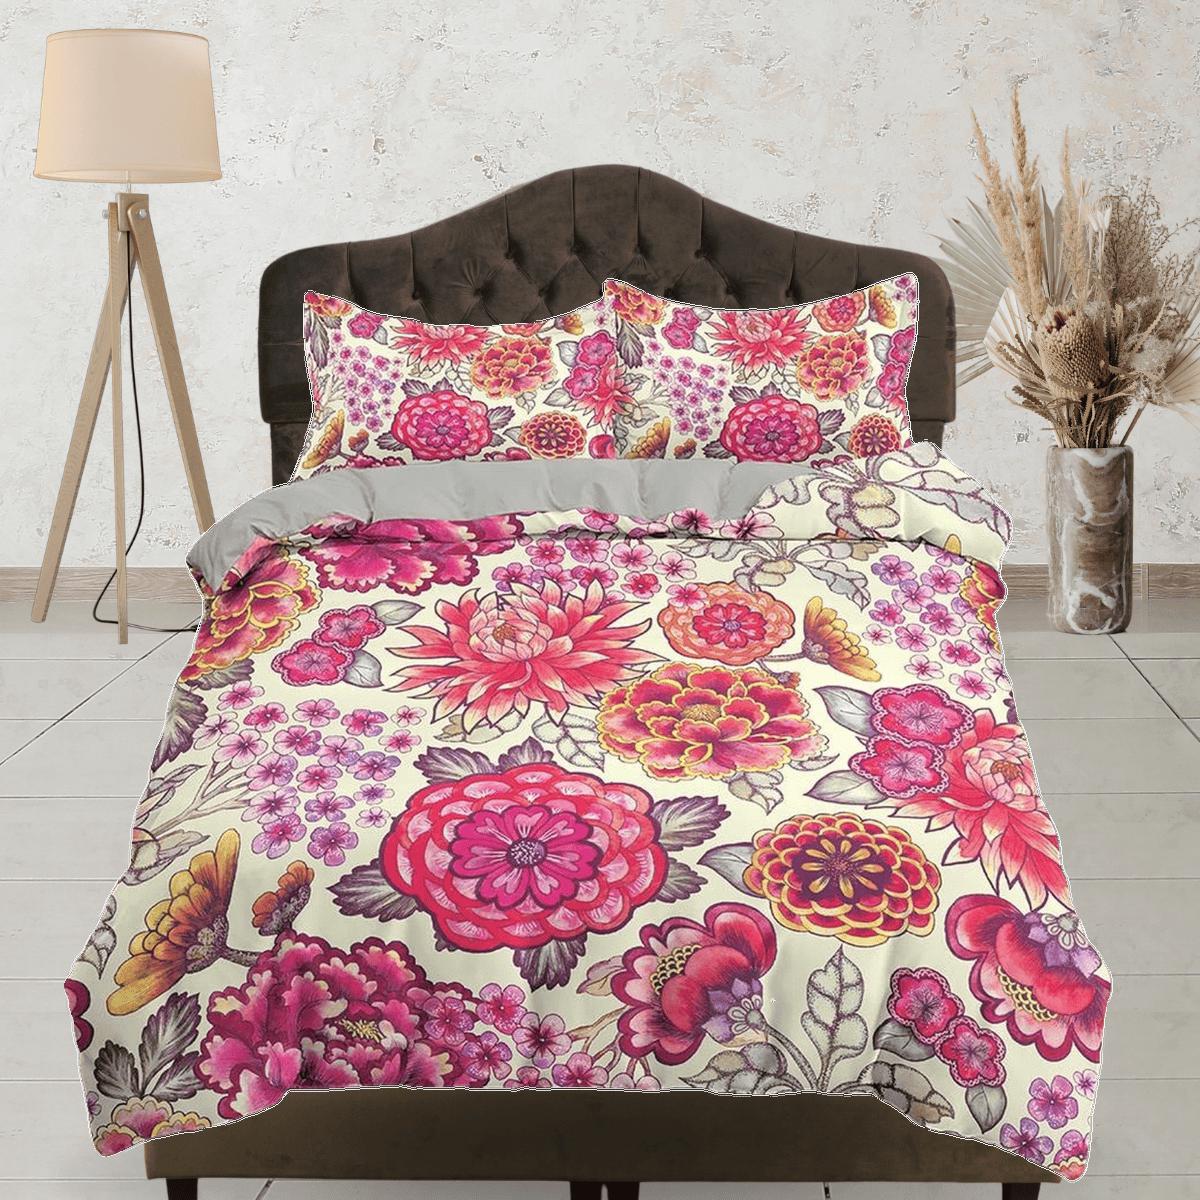 daintyduvet Pink camelia floral duvet cover colorful bedding, teen girl bedroom, baby girl crib bedding boho maximalist bedspread aesthetic bedding